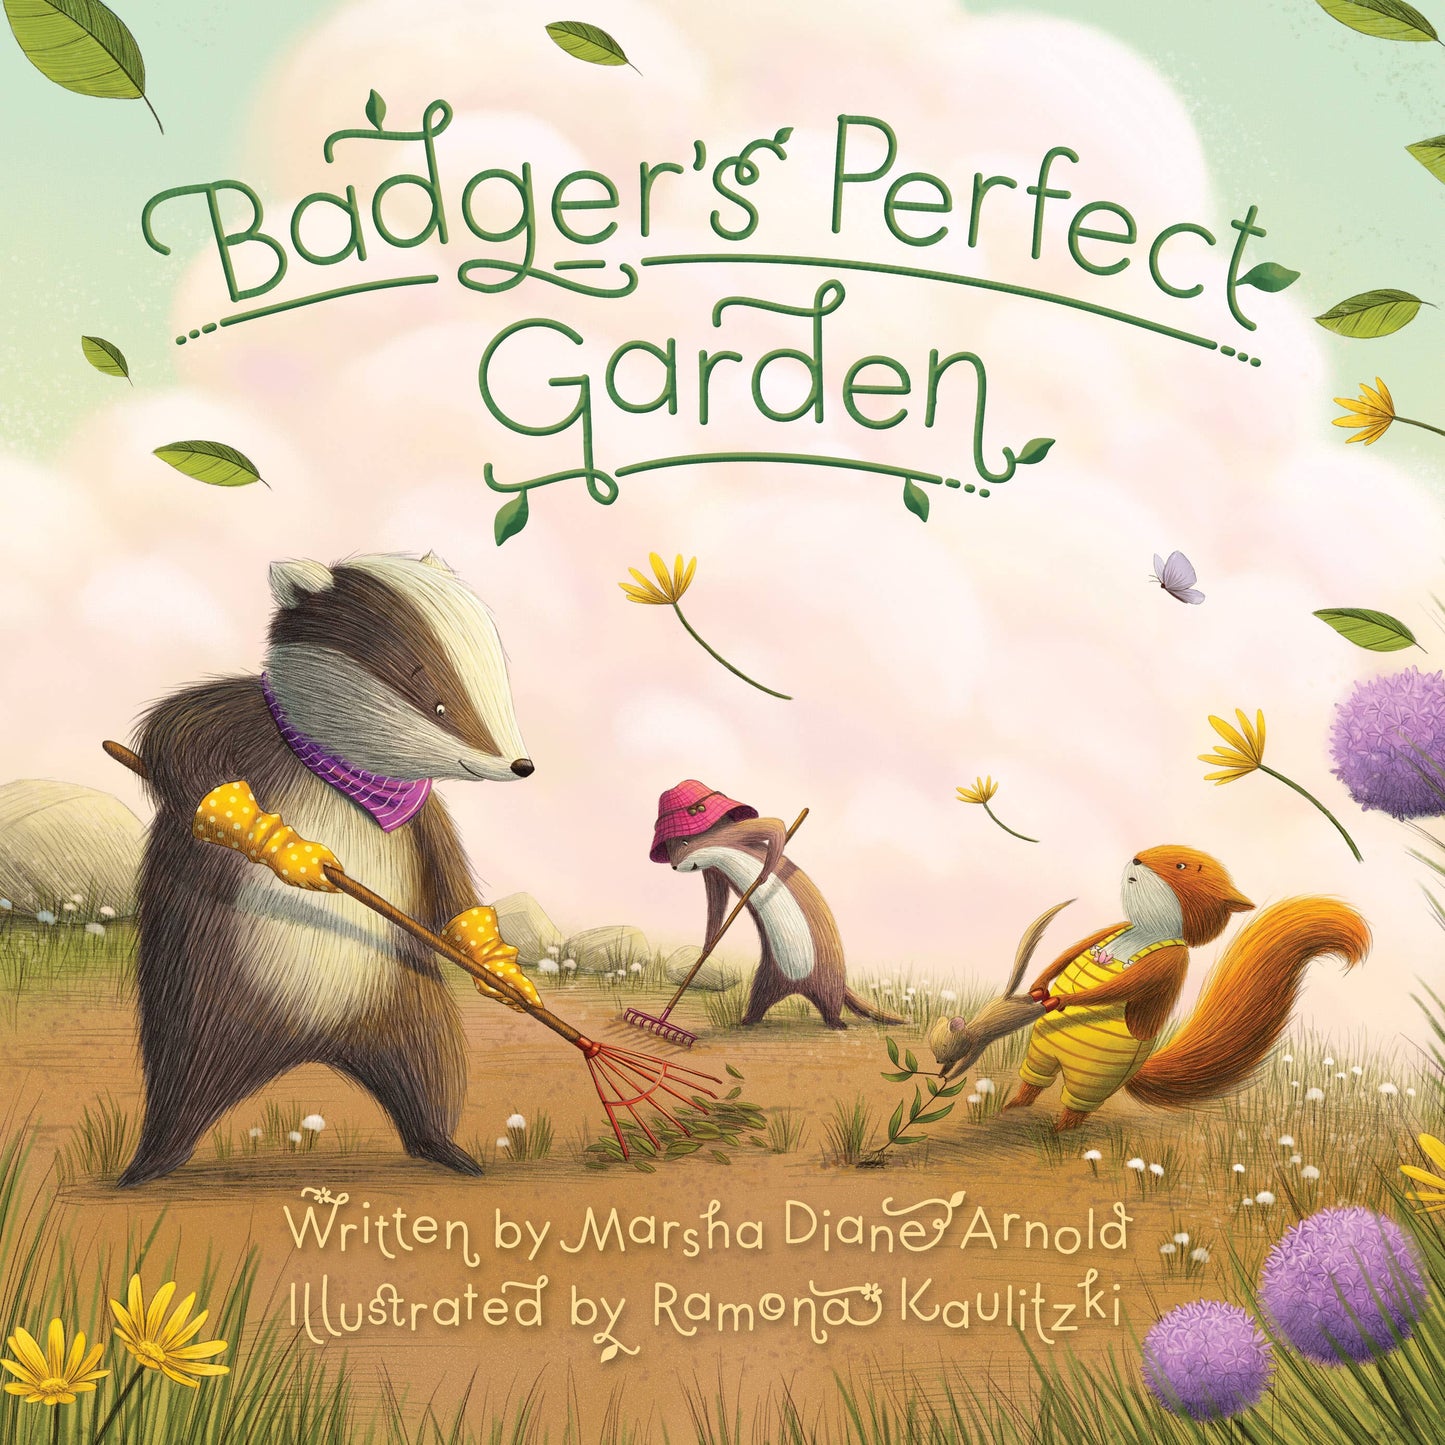 Sleeping Bear Press - Badger's Perfect Garden paperback